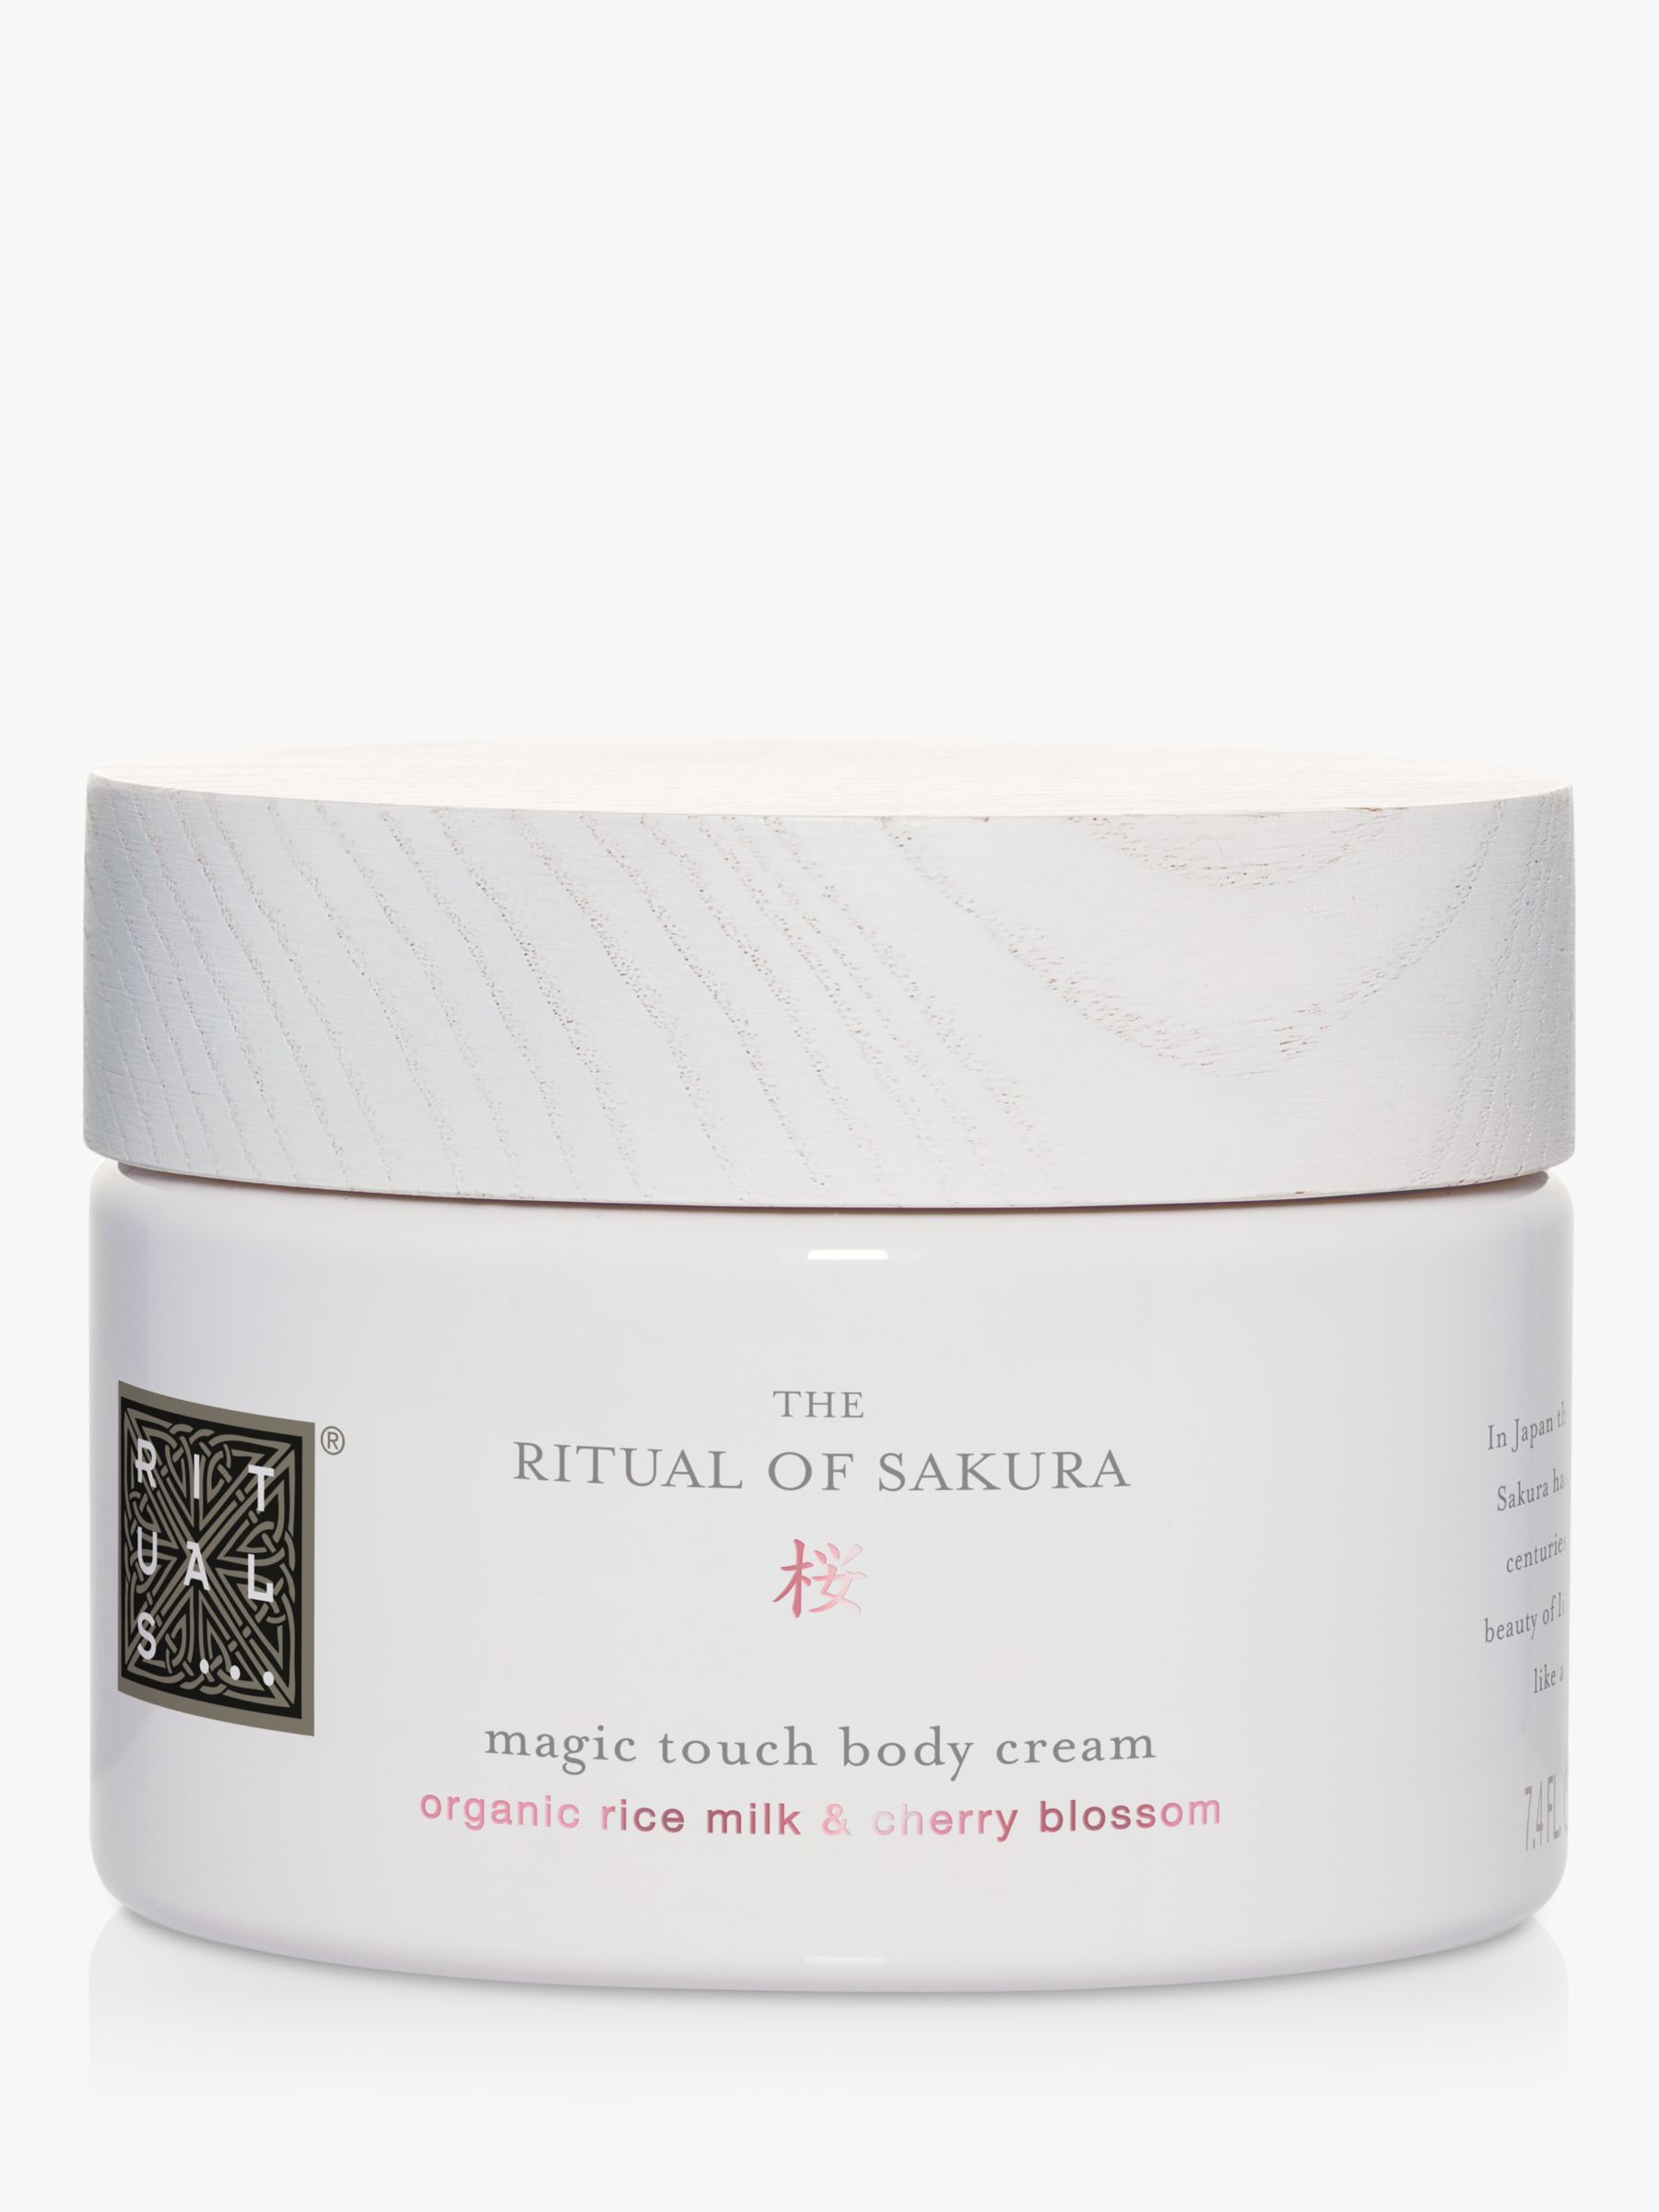 Rituals The Ritual of Sakura Magic Touch Body Cream, 220ml